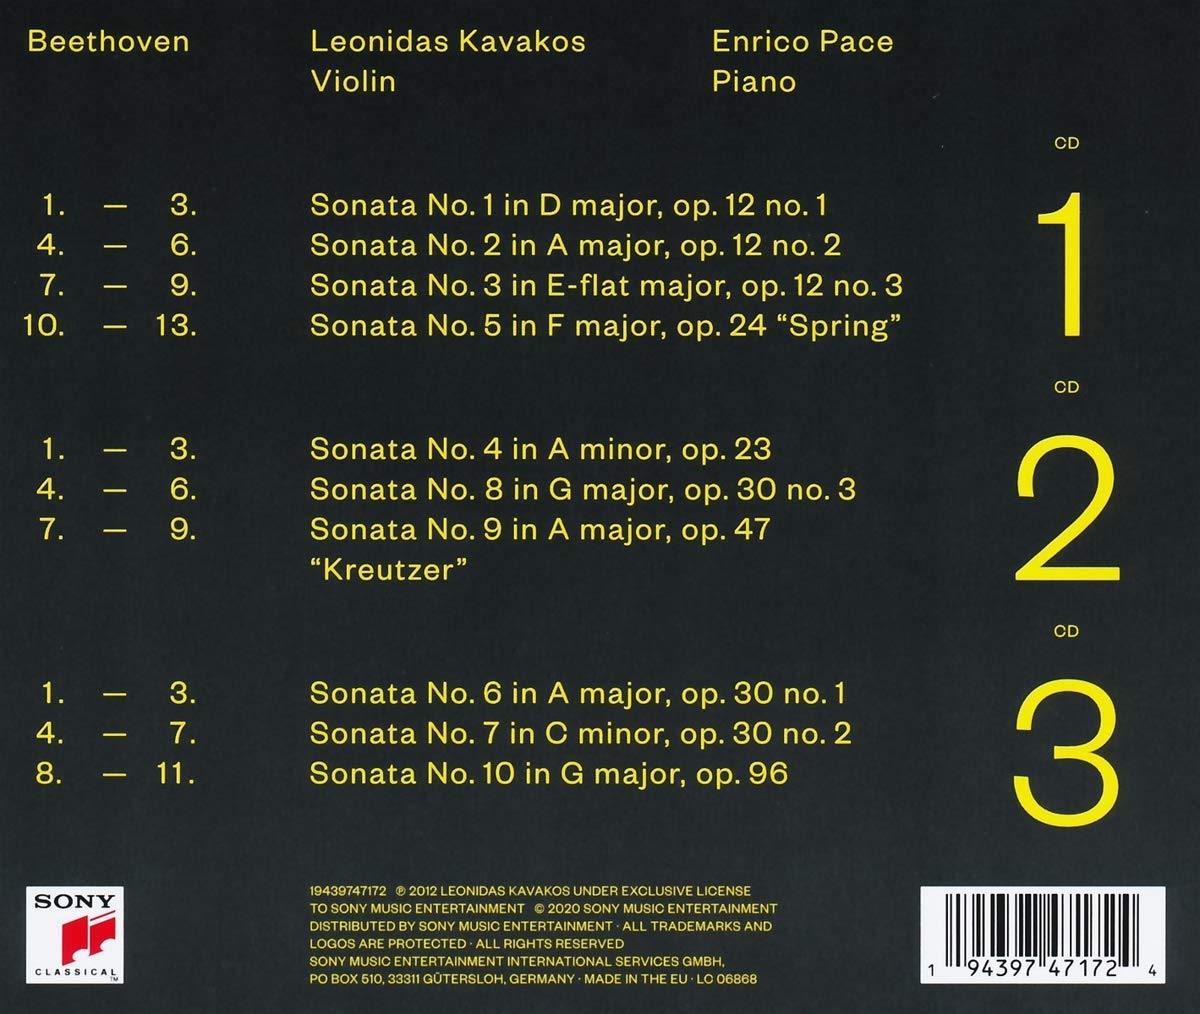 Leonidas Kavakos 베토벤: 바이올린 소나타 전곡집 - 레오니다스 카바코스 (Beethoven: The Complete Sonatas for Violin and Piano)